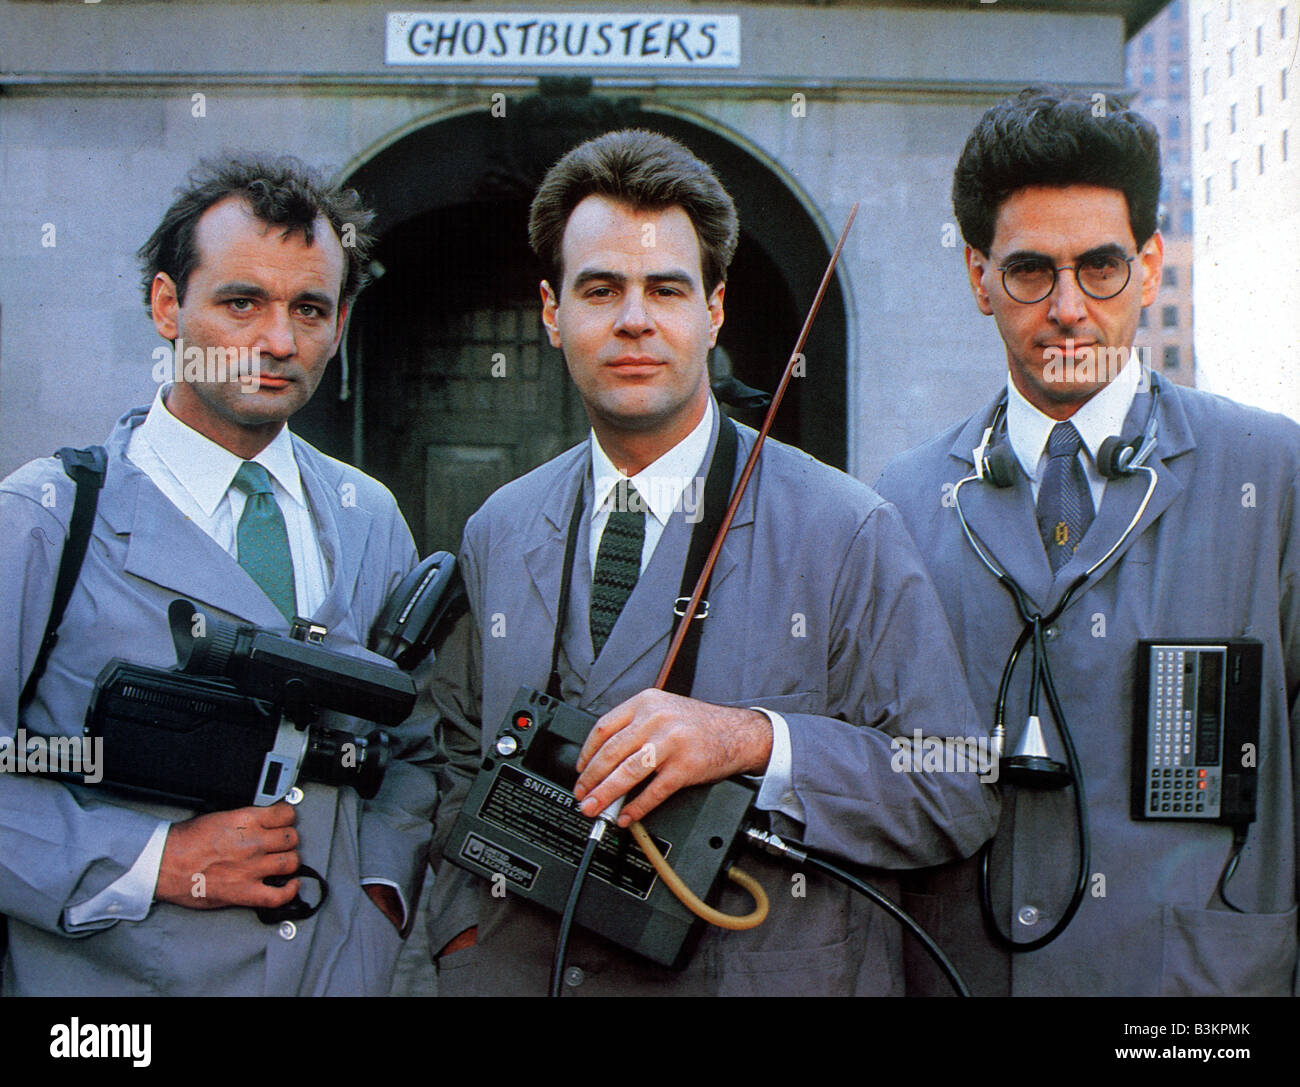 GHOSTBUSTERS 1984 Columbia/Delphi con pellicola da sinistra Bill Murray, Dan Aykroyd e Harold Ramis Foto Stock